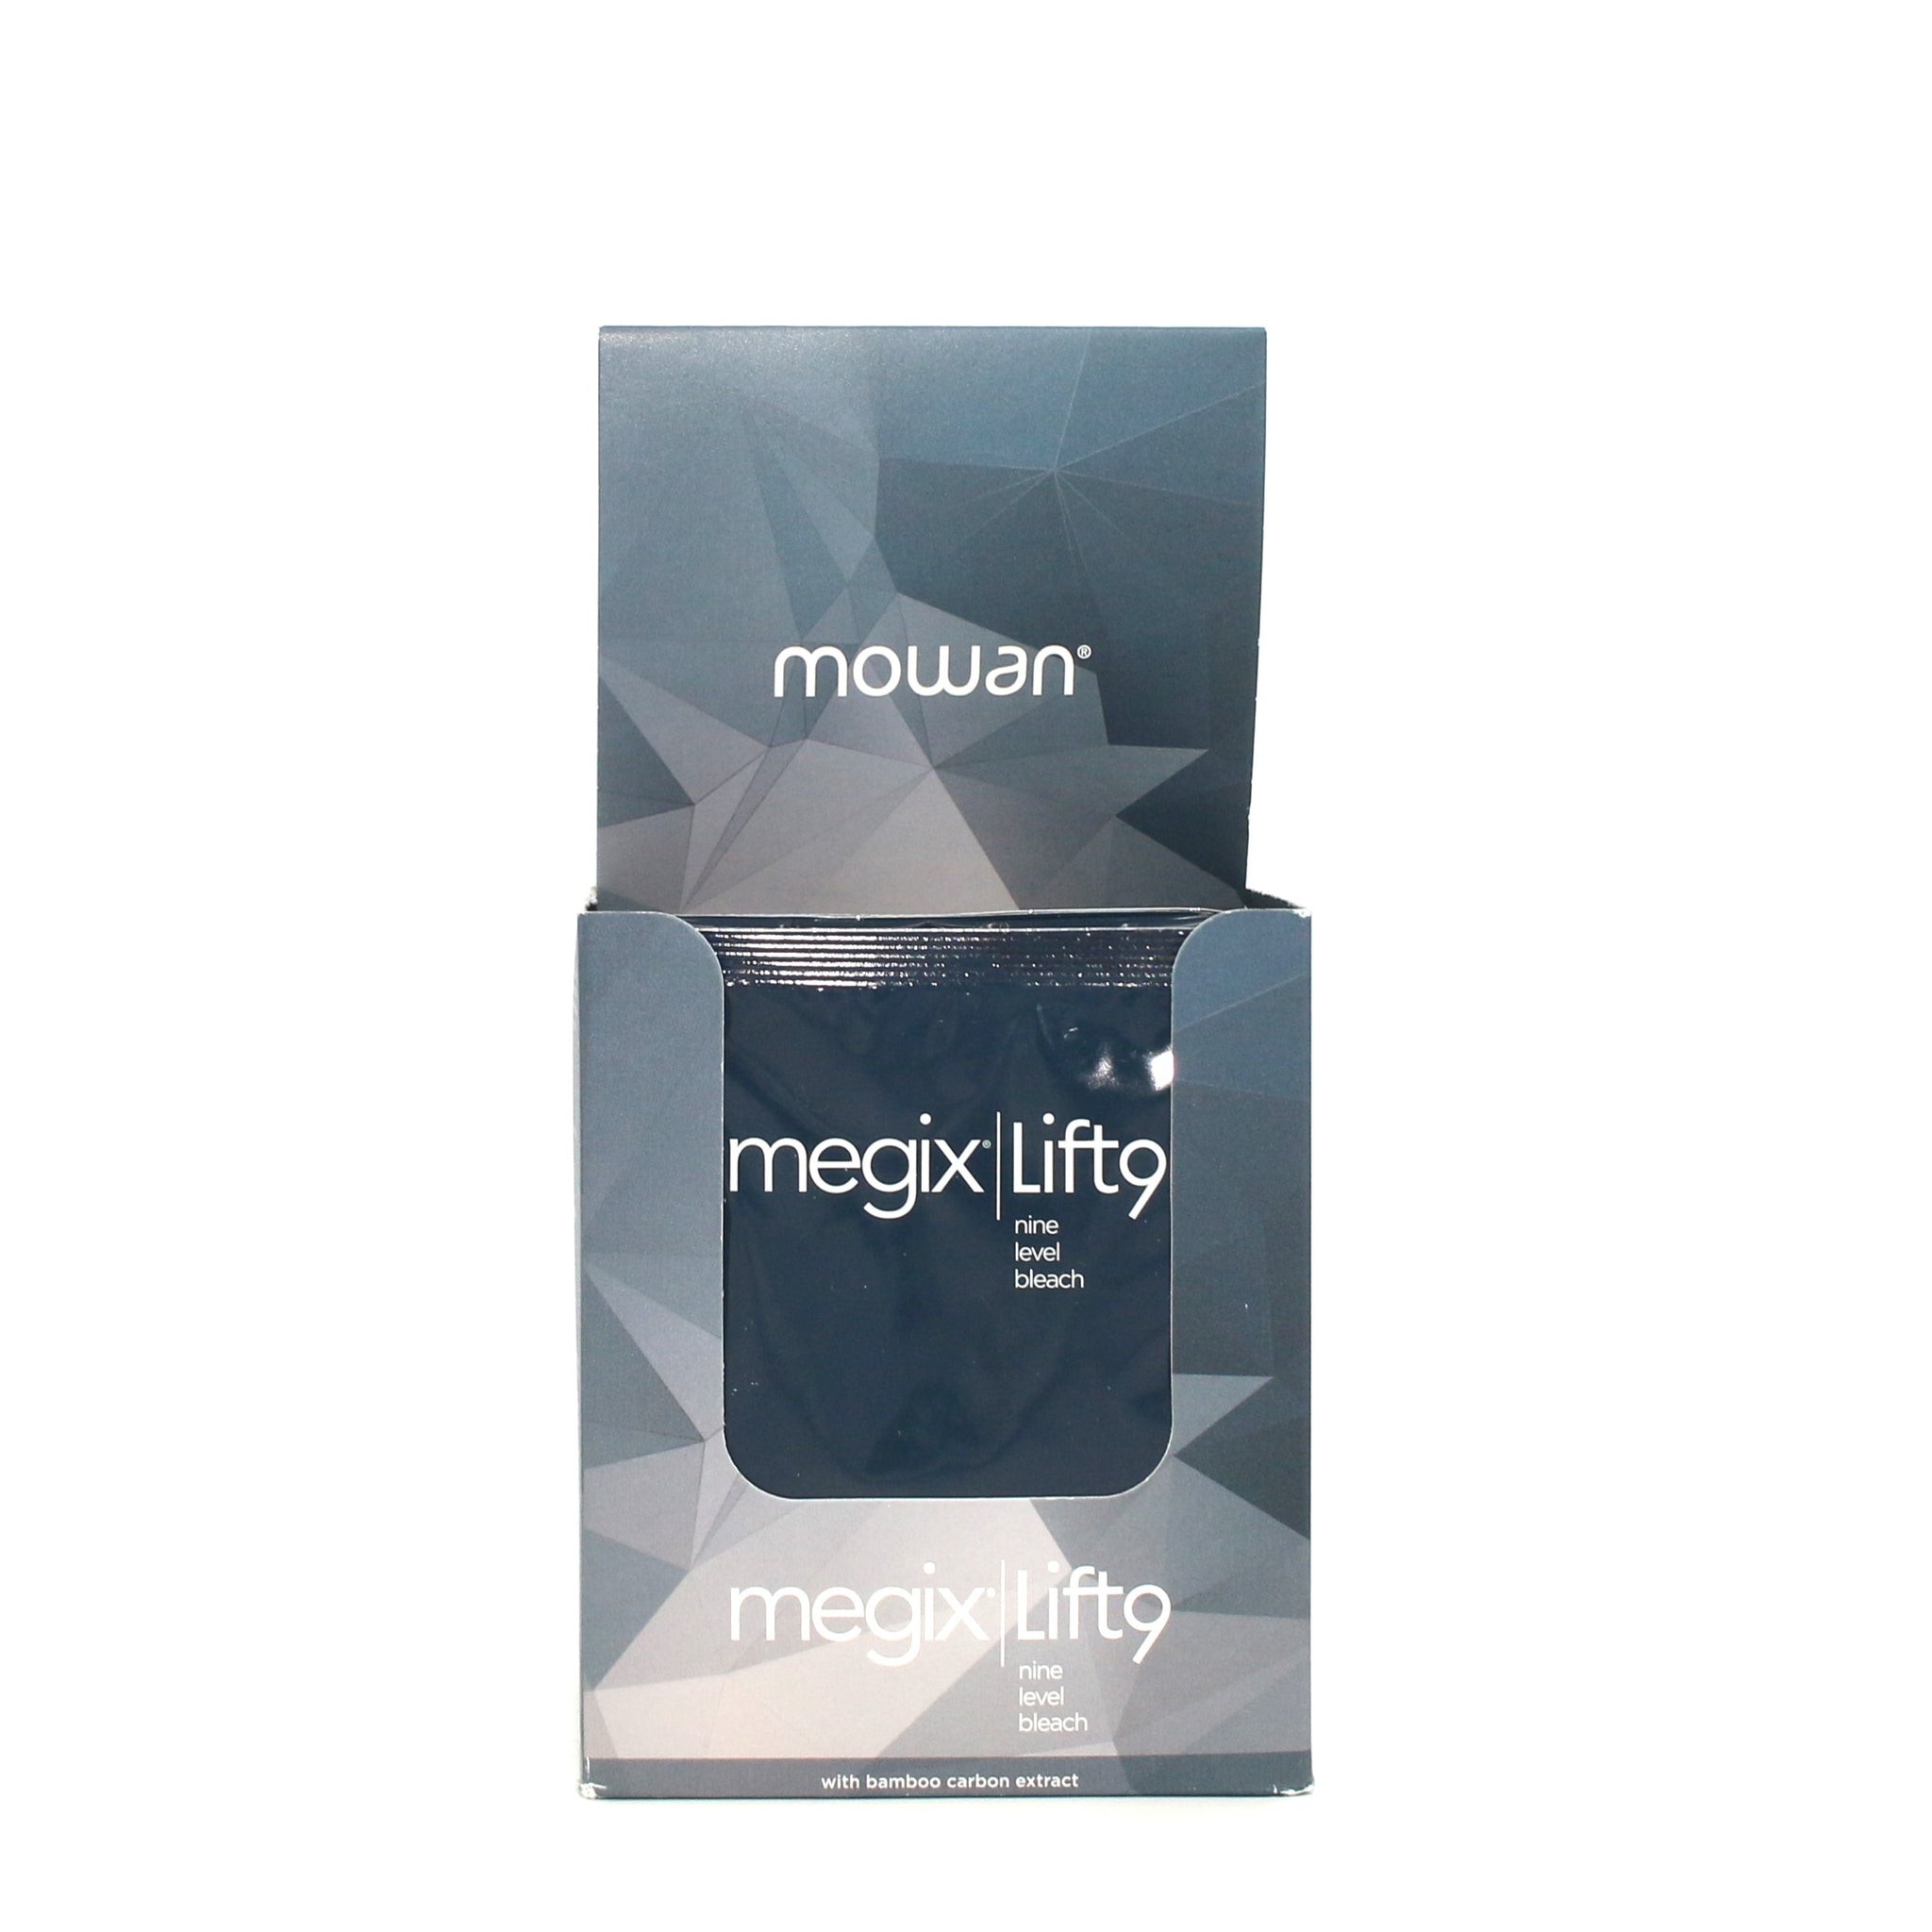 MOWAN Megix Lift 9 Nine Level Bleach with Bamboo Carbon Extract 1.06 x 12 Pack